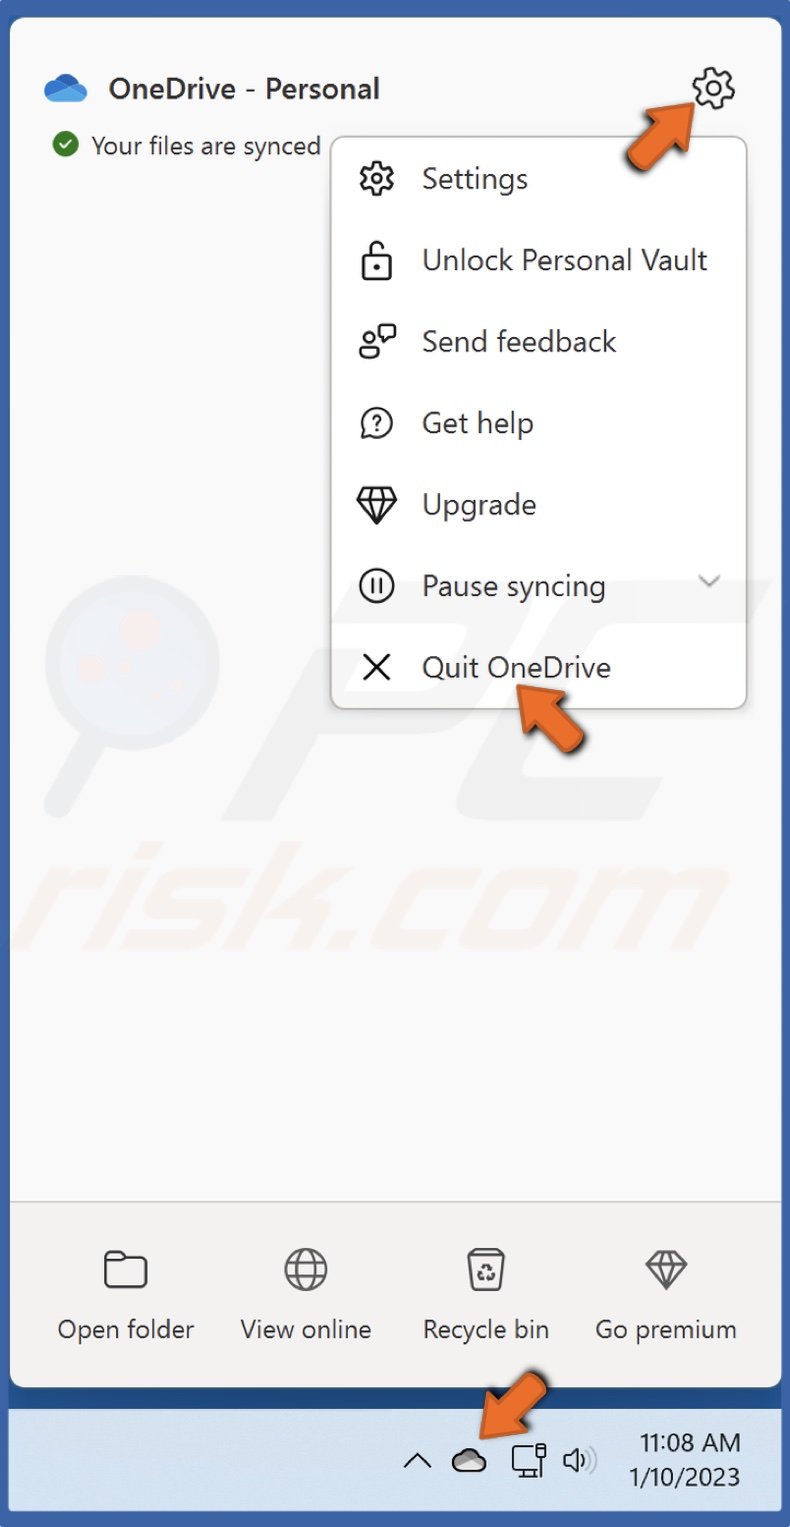 Click Quit OneDrive